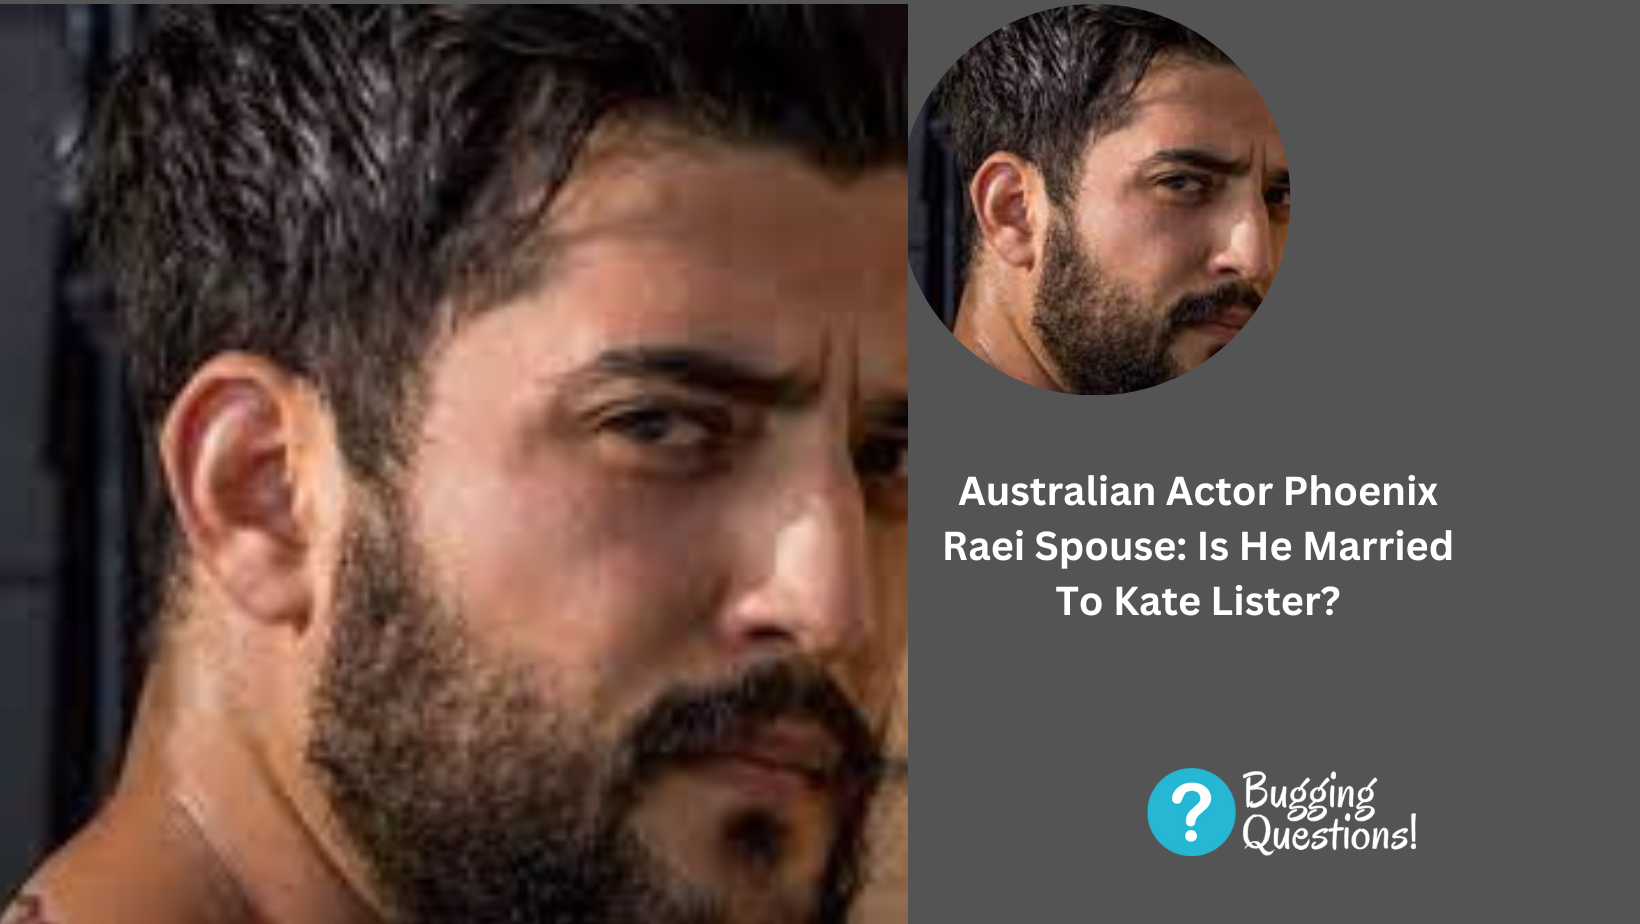 Australian Actor Phoenix Raei Spouse: Is He Married To Kate Lister?